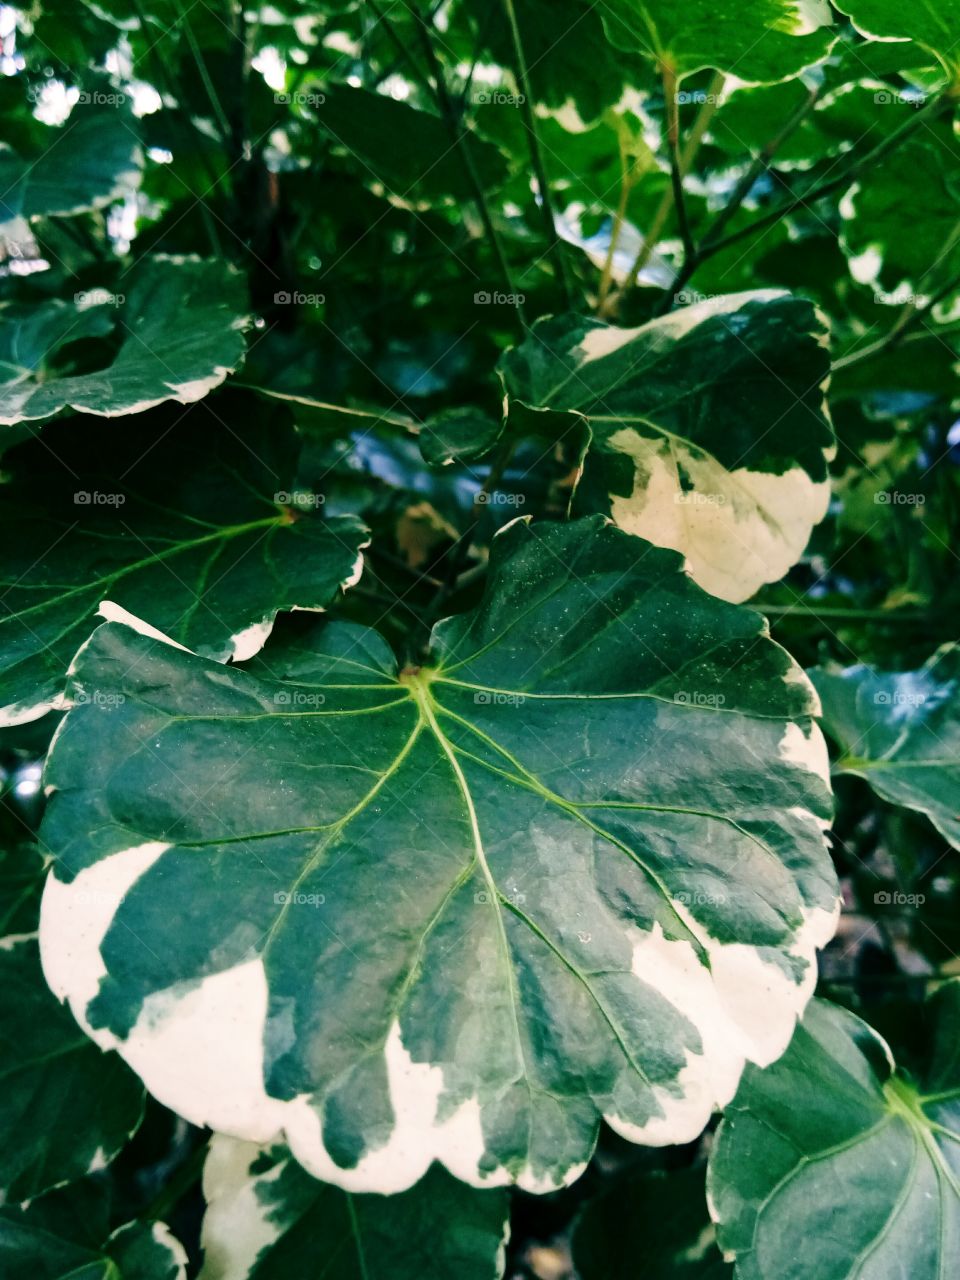 leaf
tree
green